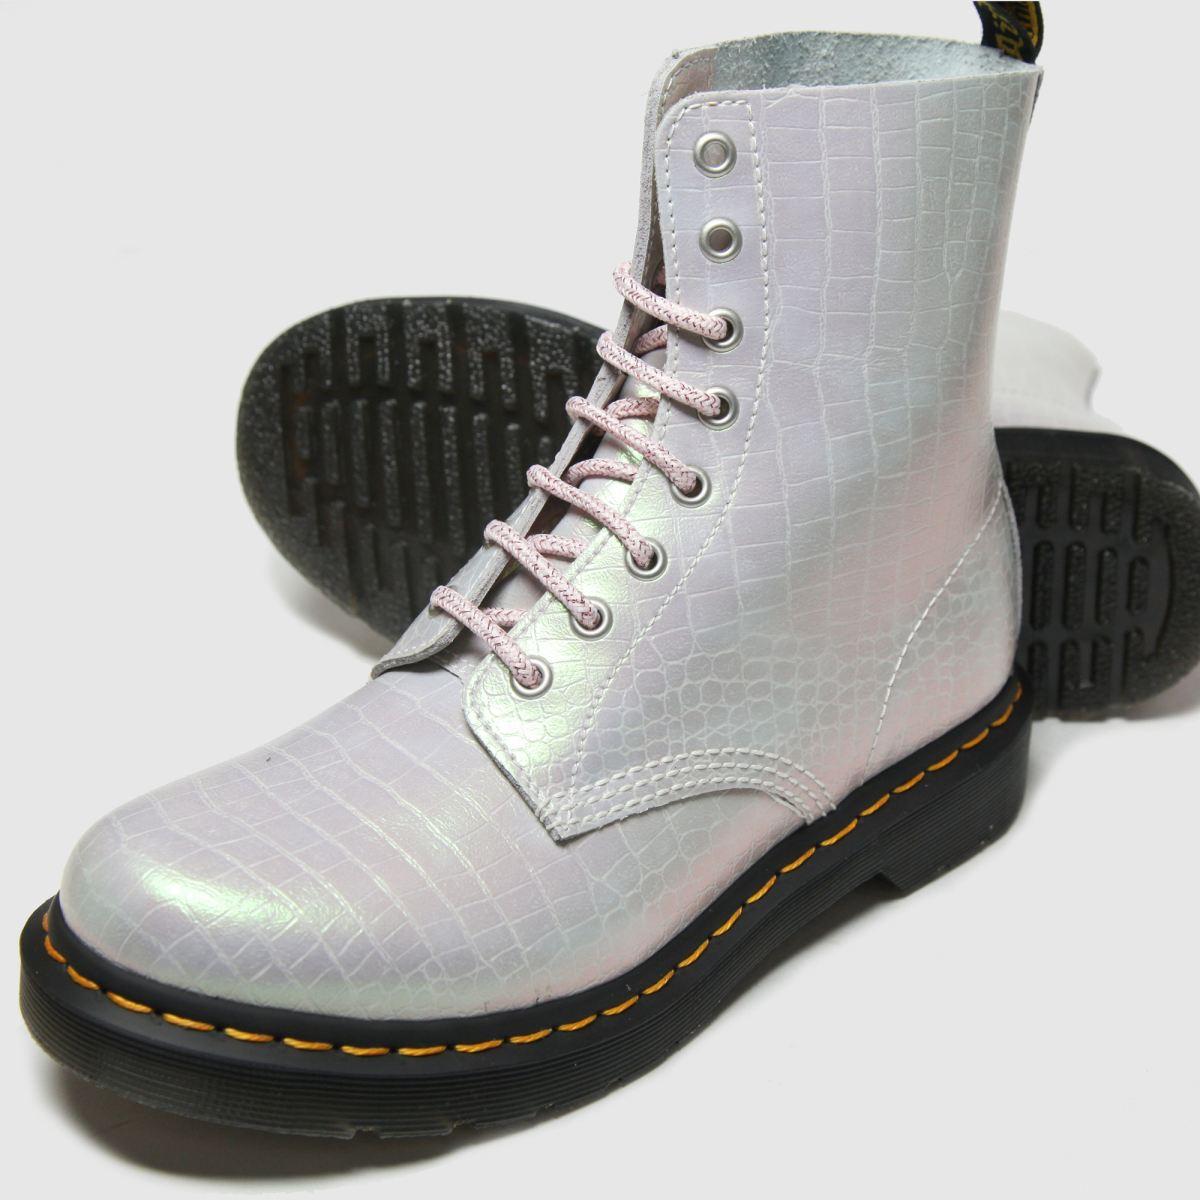 dr martens iridescent croc boots